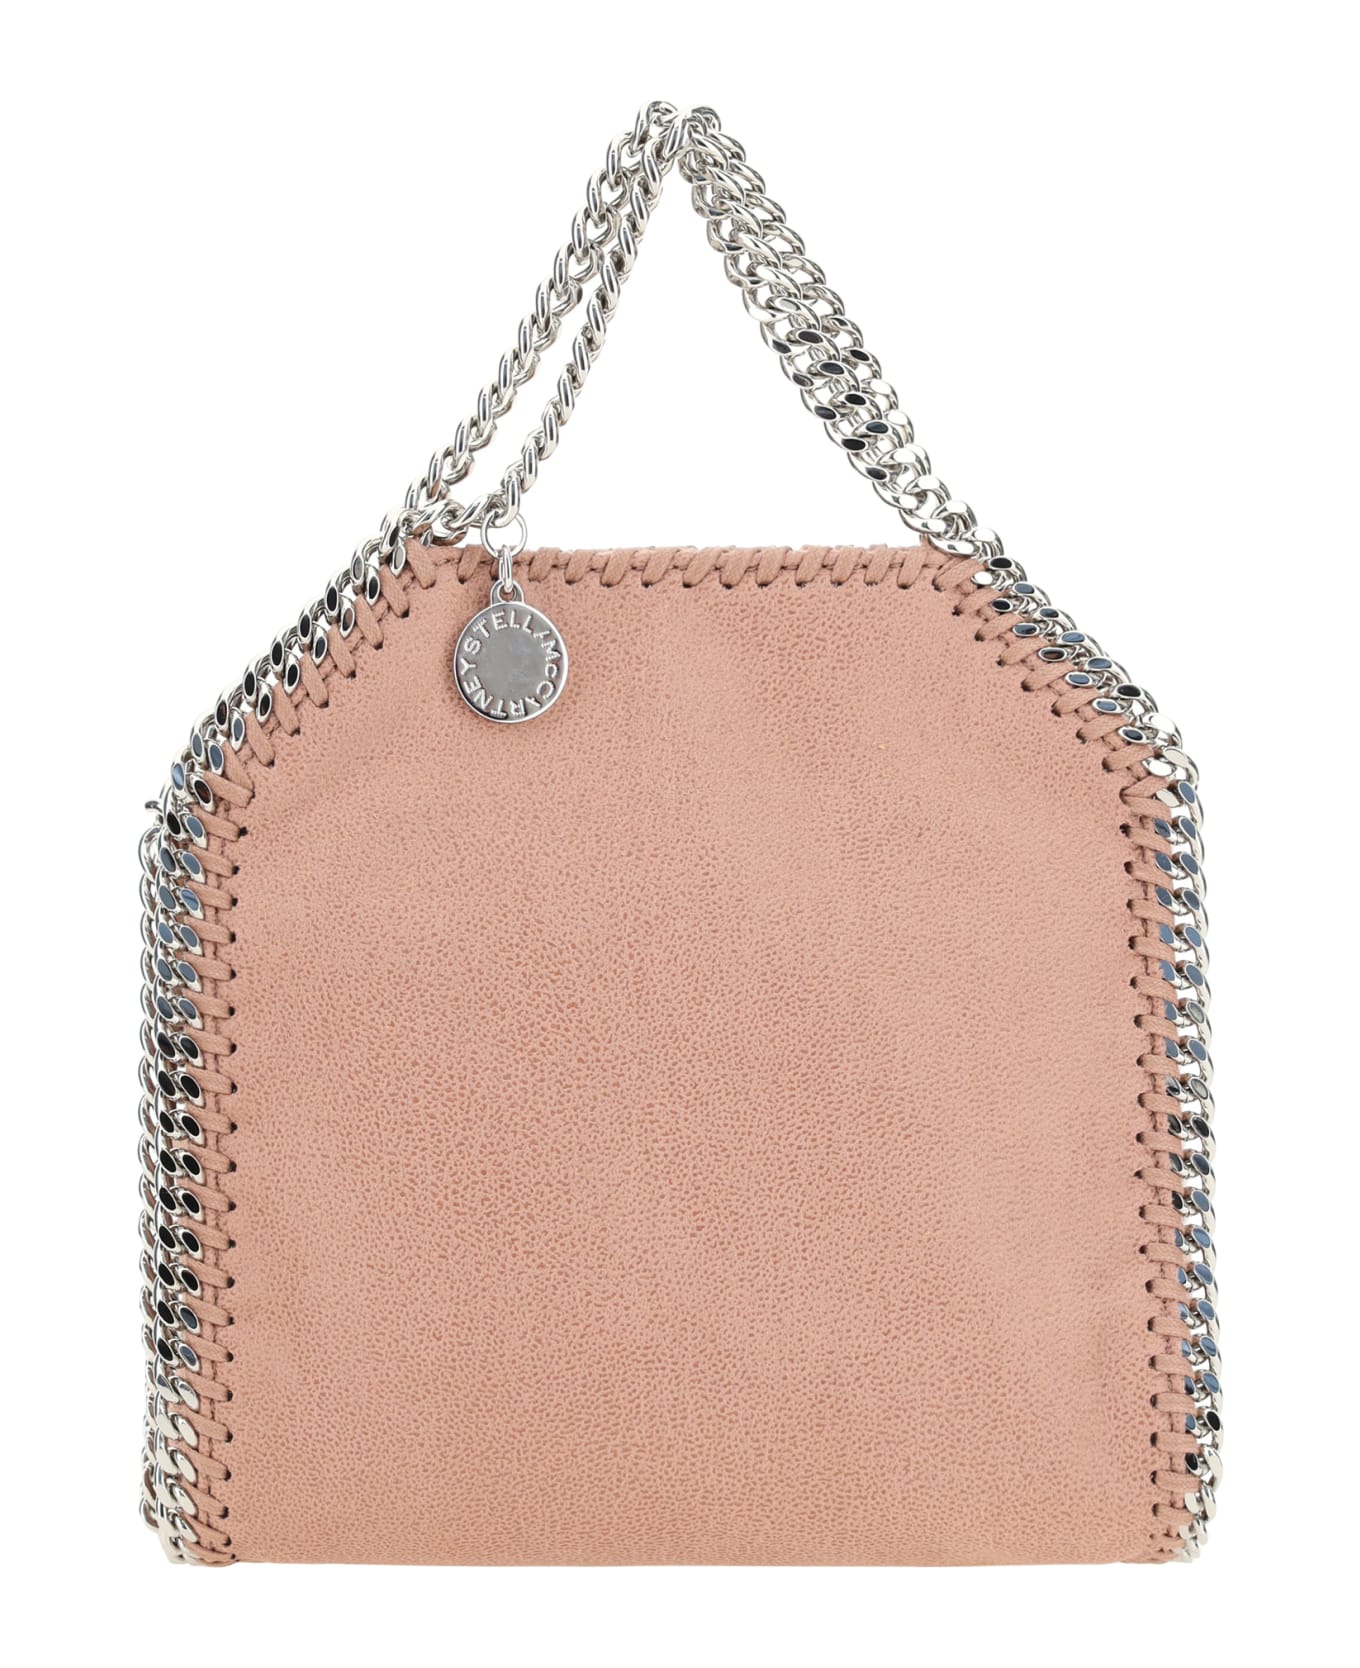 Stella McCartney Tiny 'falabella' Handbag - Chain Pink